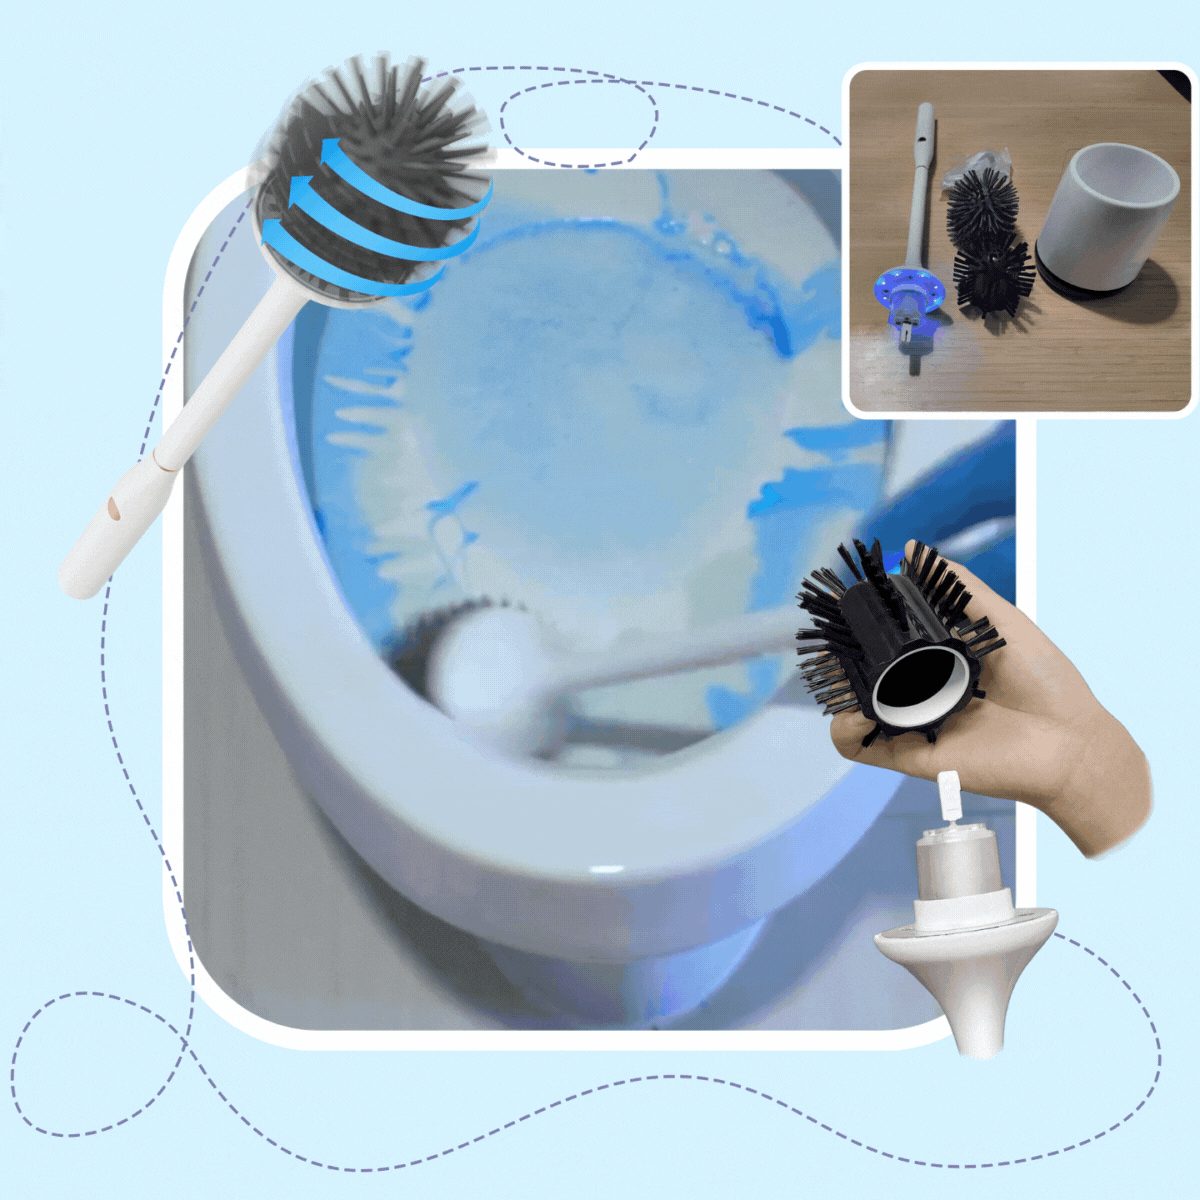 Youpin Wireless Electric Toilet Brush UVC Sterilization